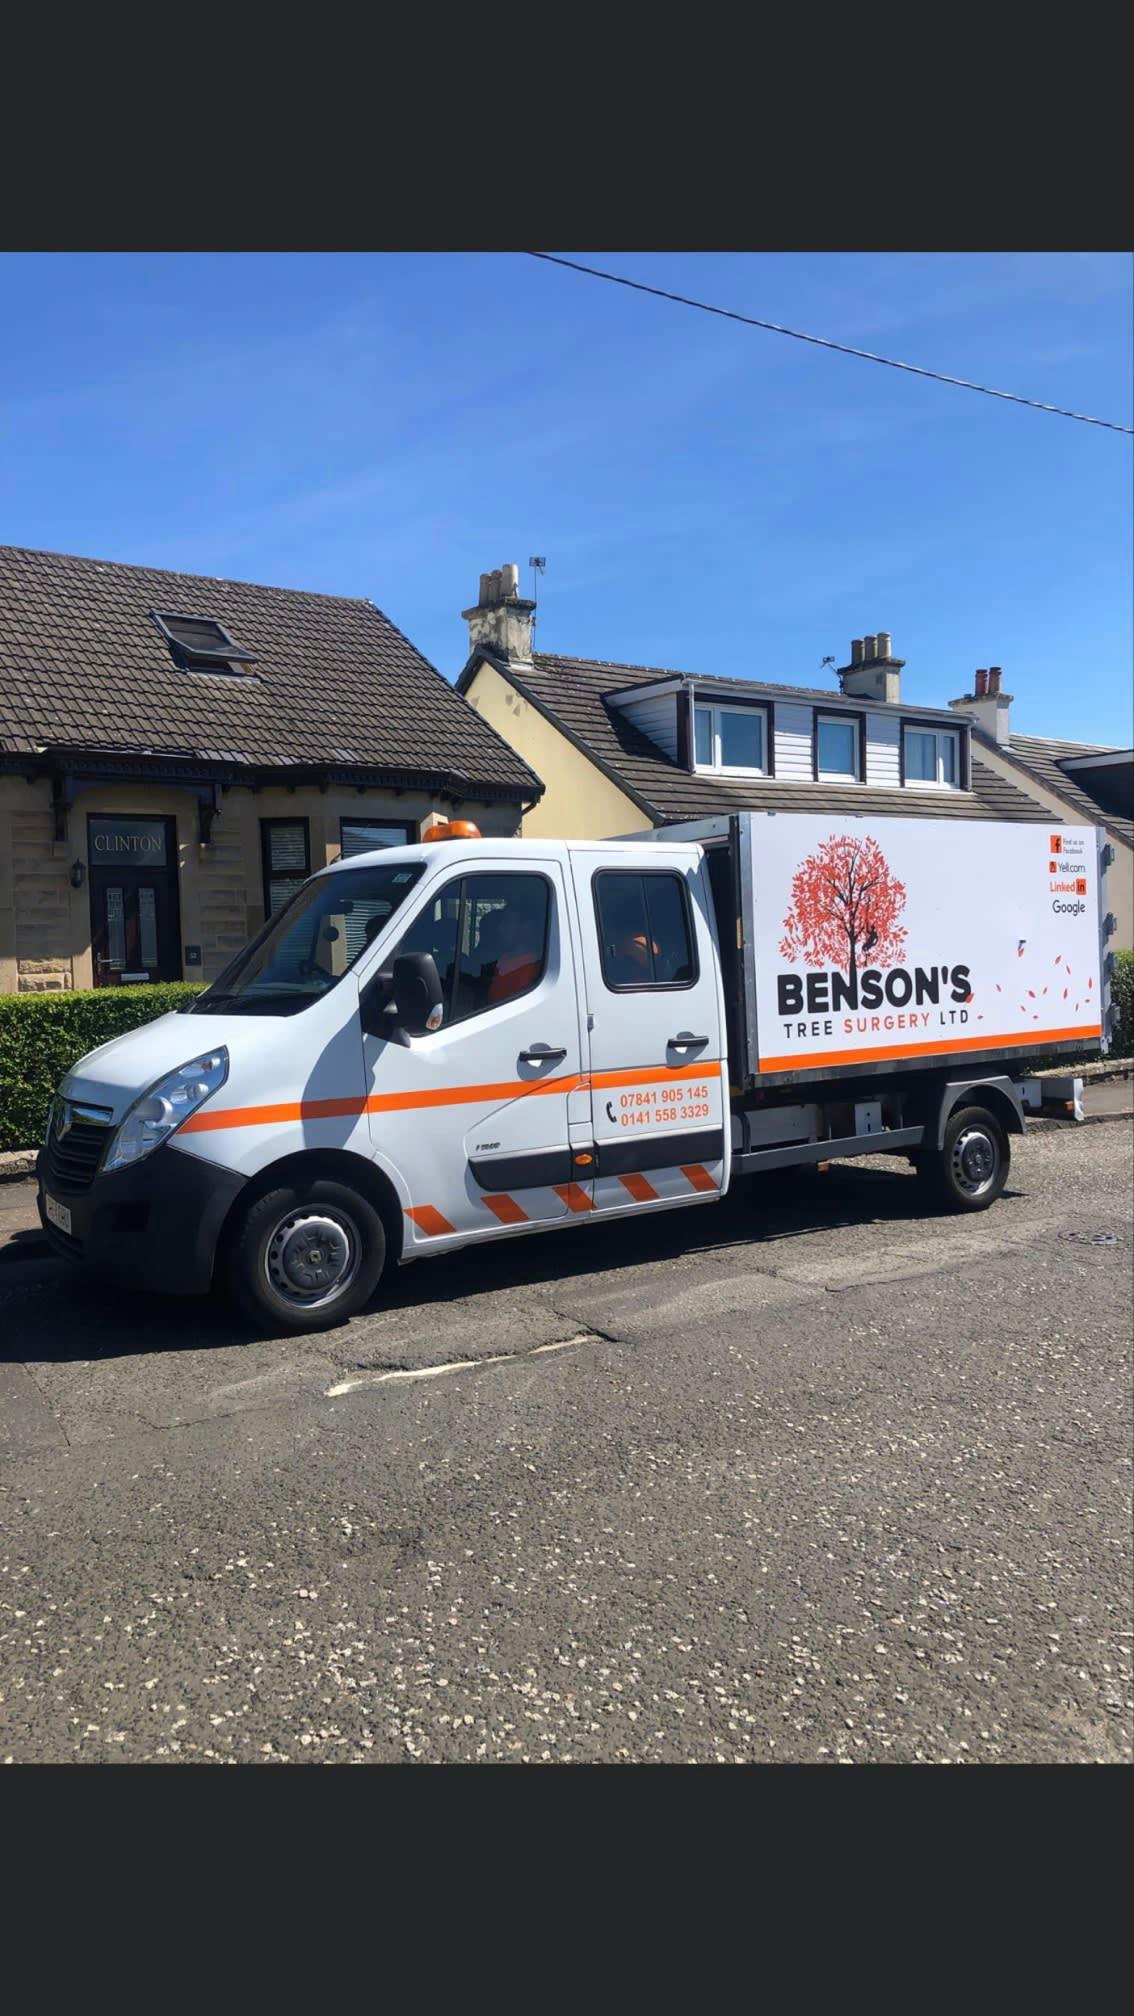 Bensons Tree Surgery Ltd Glasgow 07841 905145